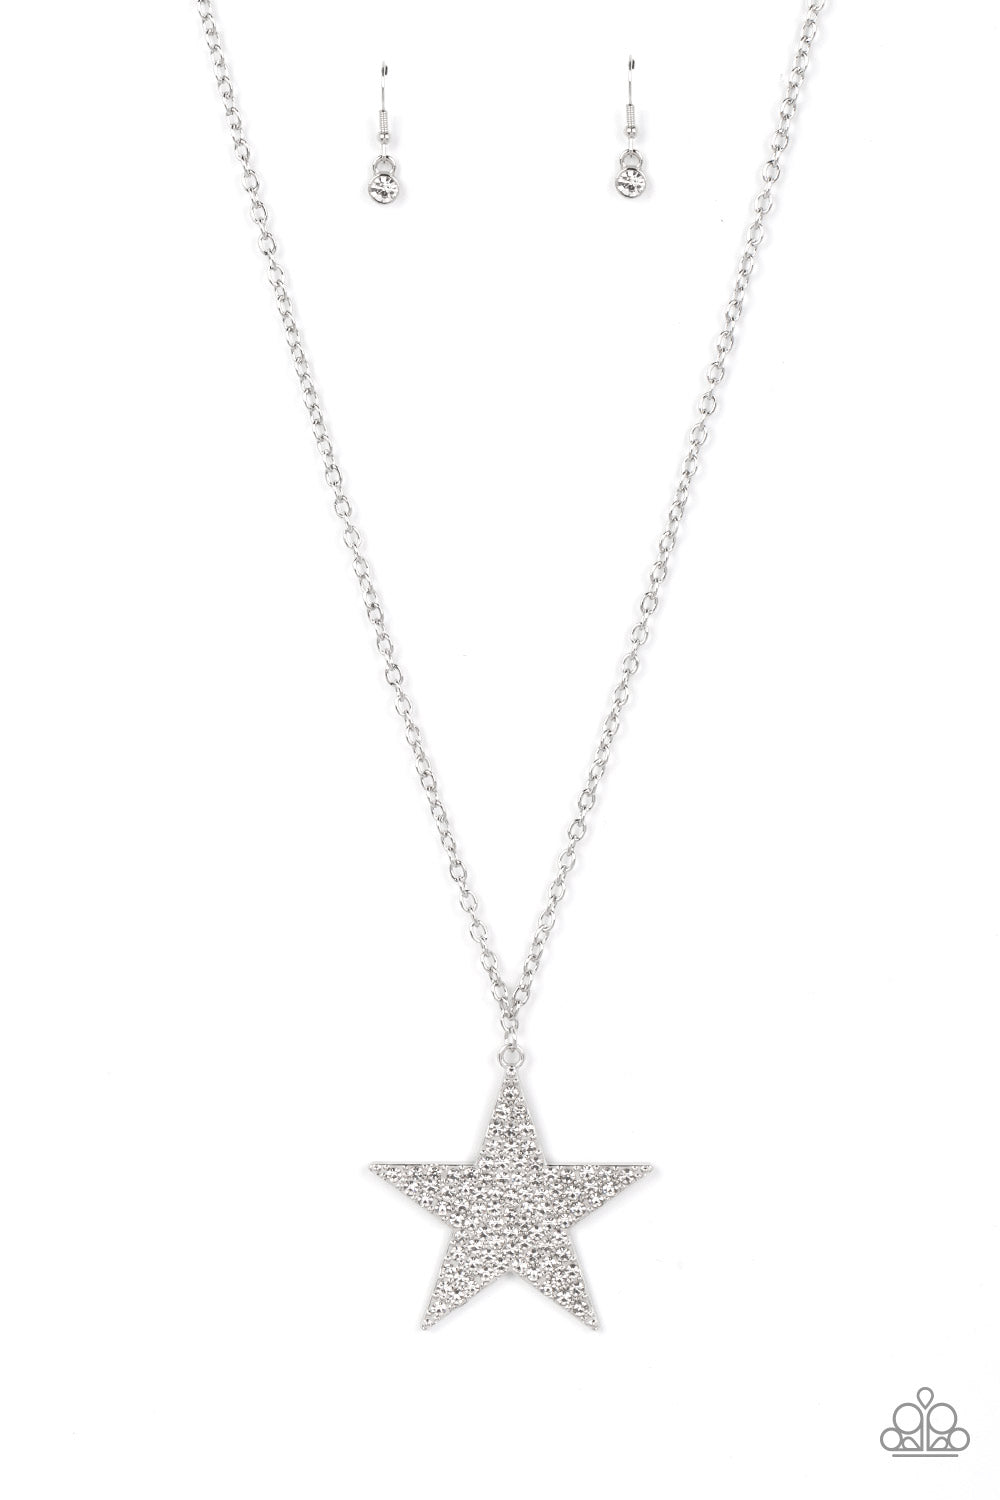 Rock Star Sparkle - white - Paparazzi necklace